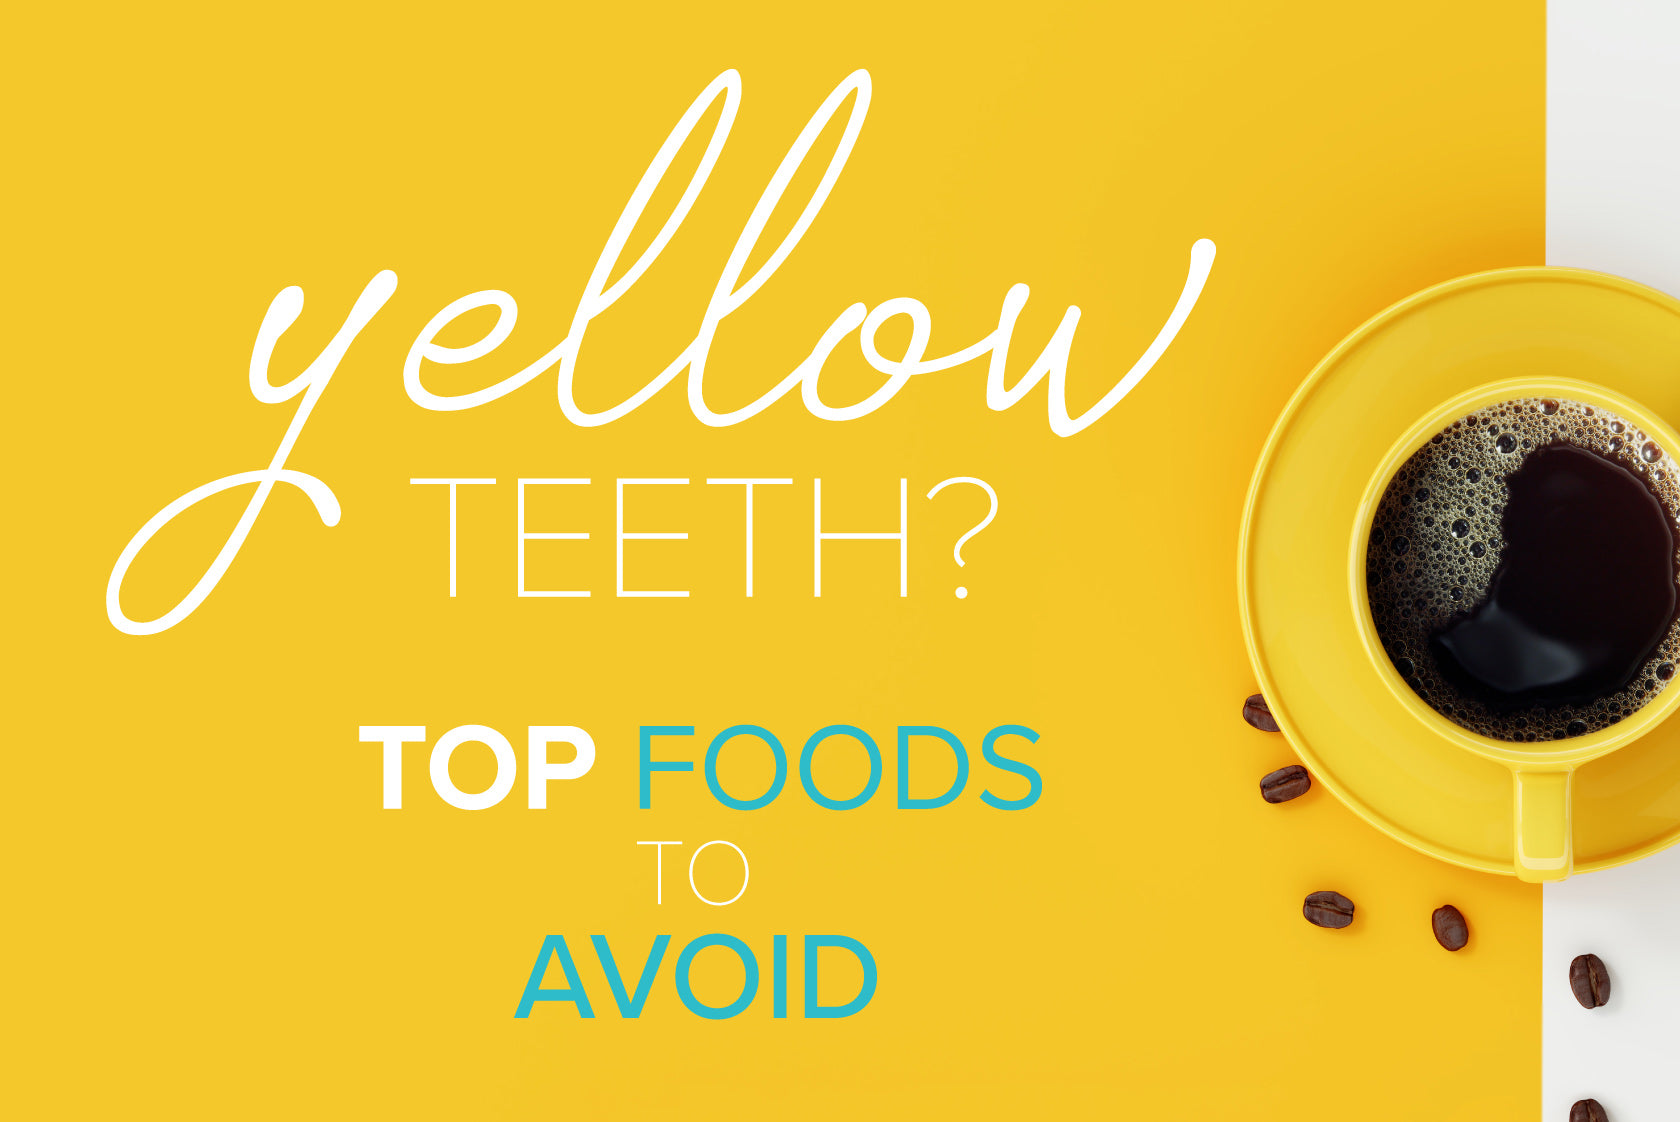 Oxyfresh - Yellow Teeth Top Foods To Avoid